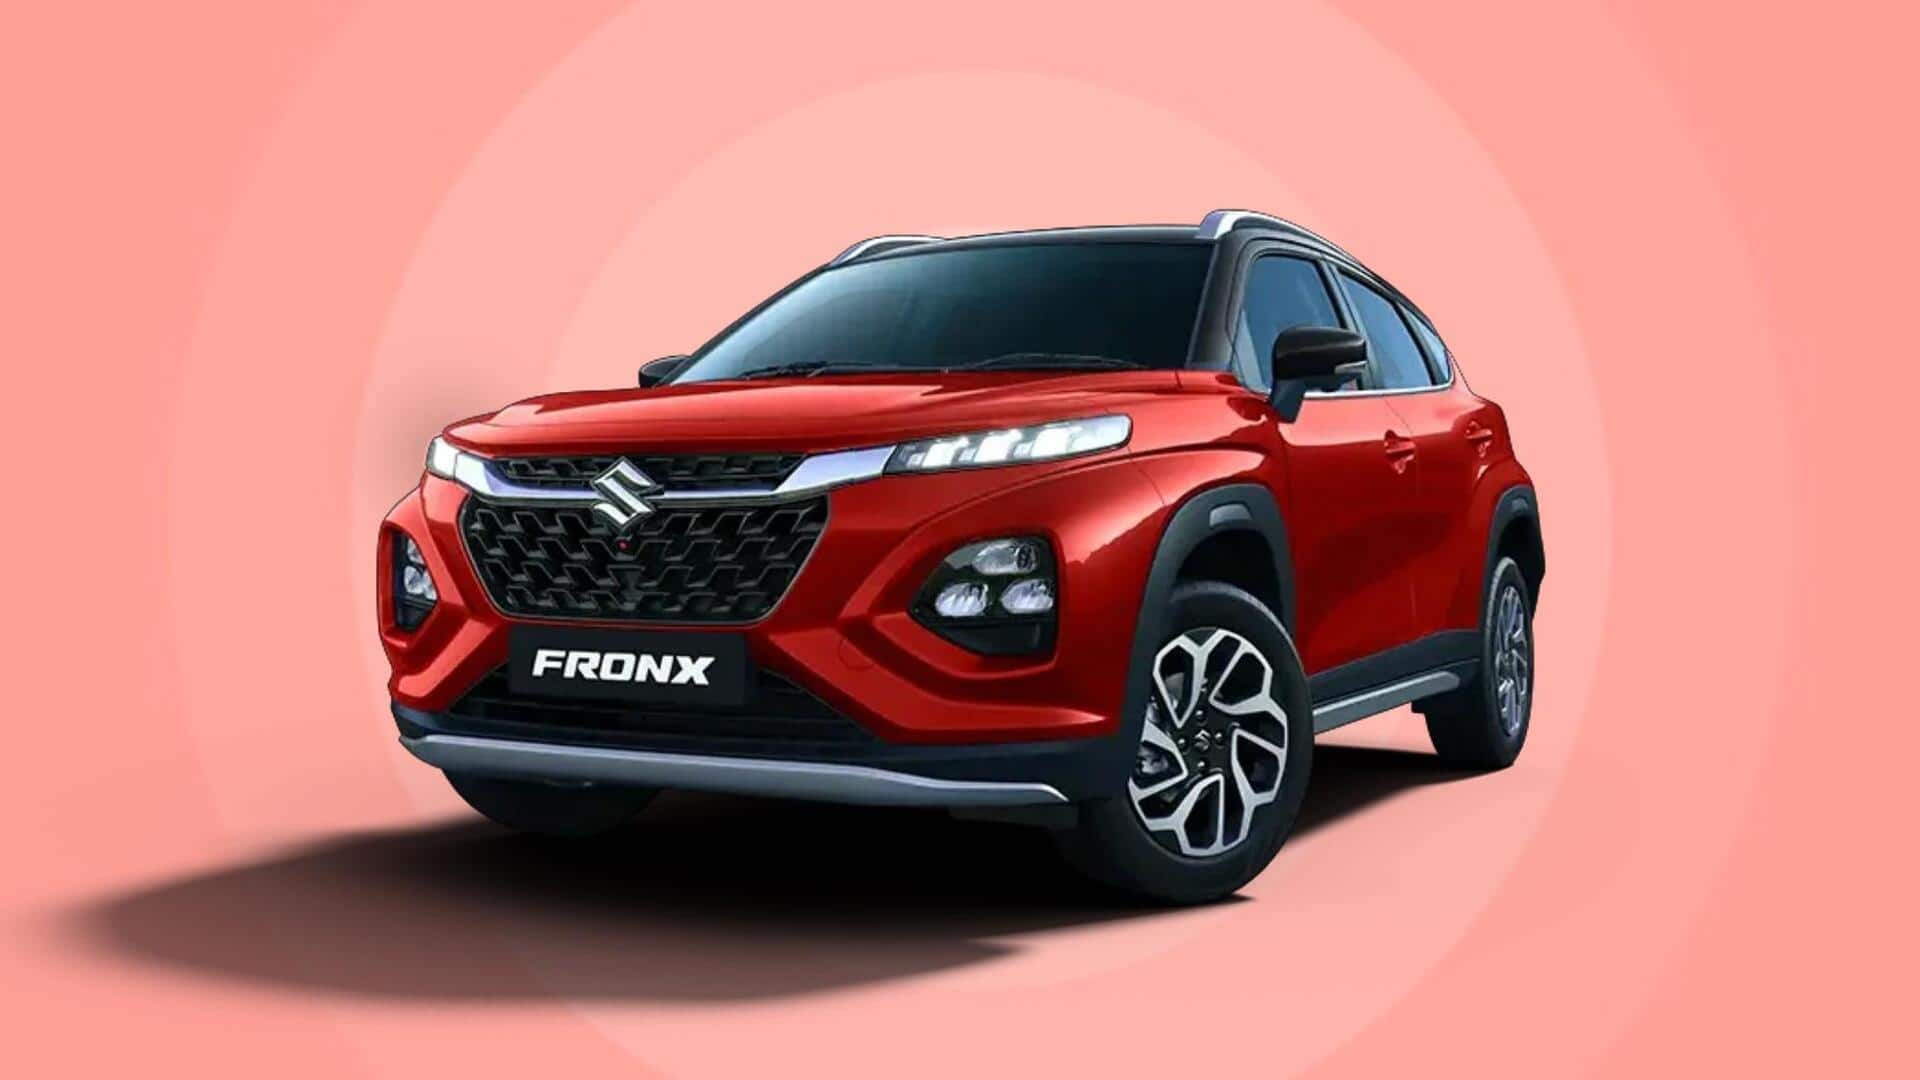 Maruti Suzuki to launch Fronx in hybrid guise in 2025